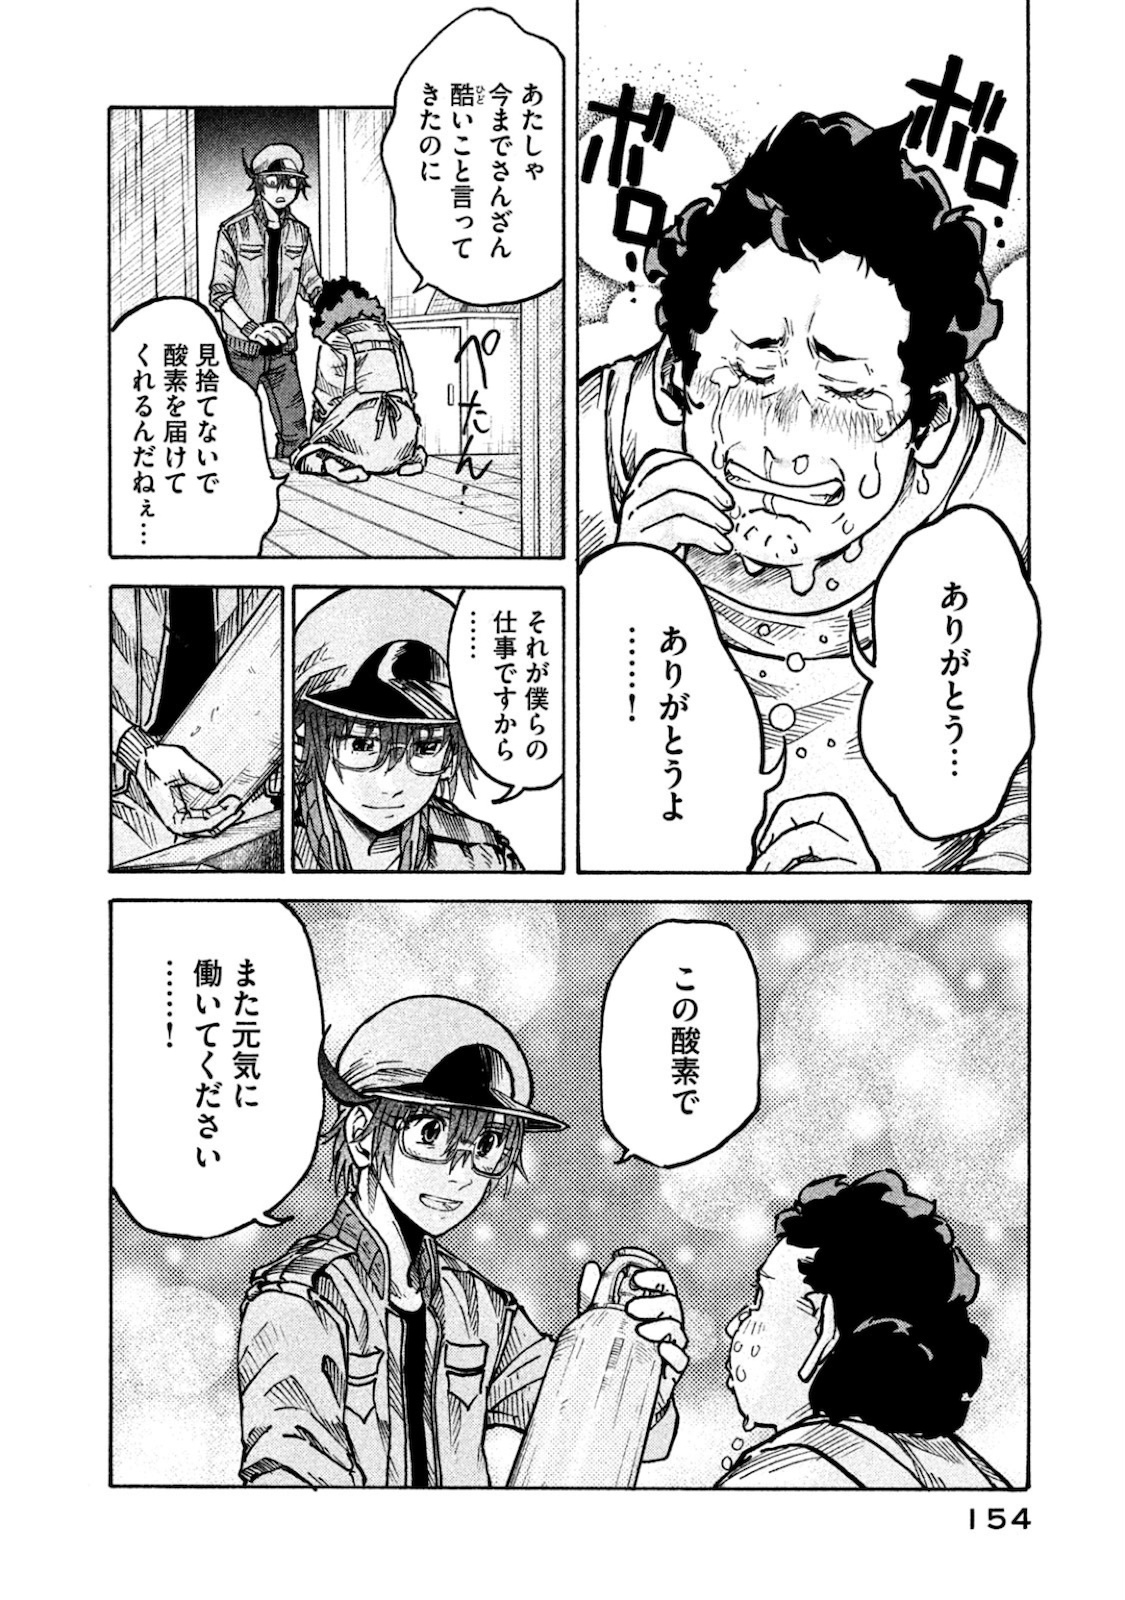 Hataraku Saibou BLACK - Chapter 10 - Page 28